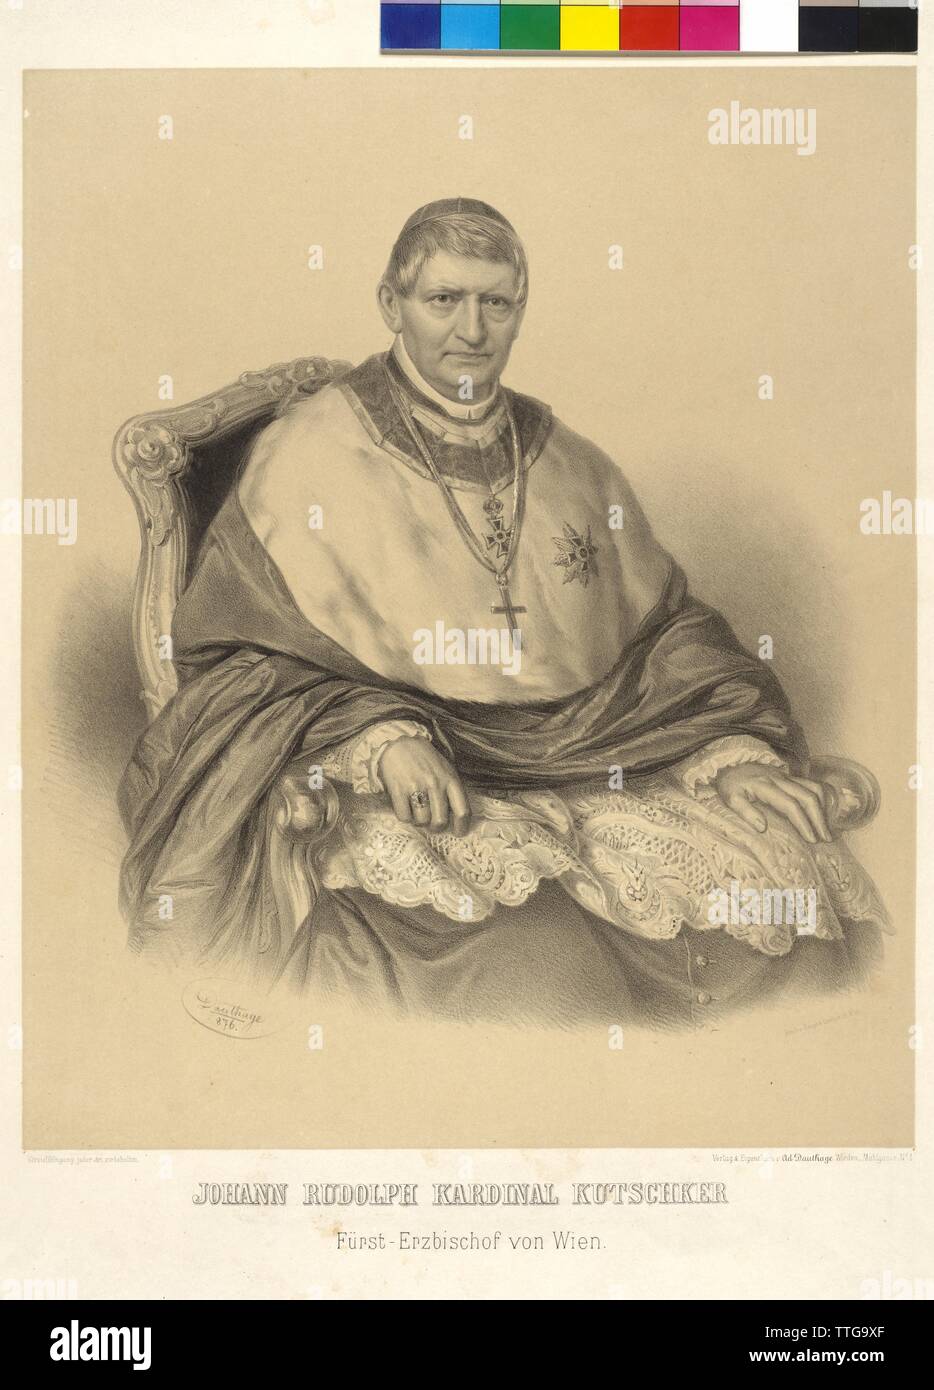 Johann Rudolf cardinal Kutschker prince-archevêque de Vienne, lithographie de Adolf Dauthage, Additional-Rights Clearance-Info-Not-Available- Banque D'Images